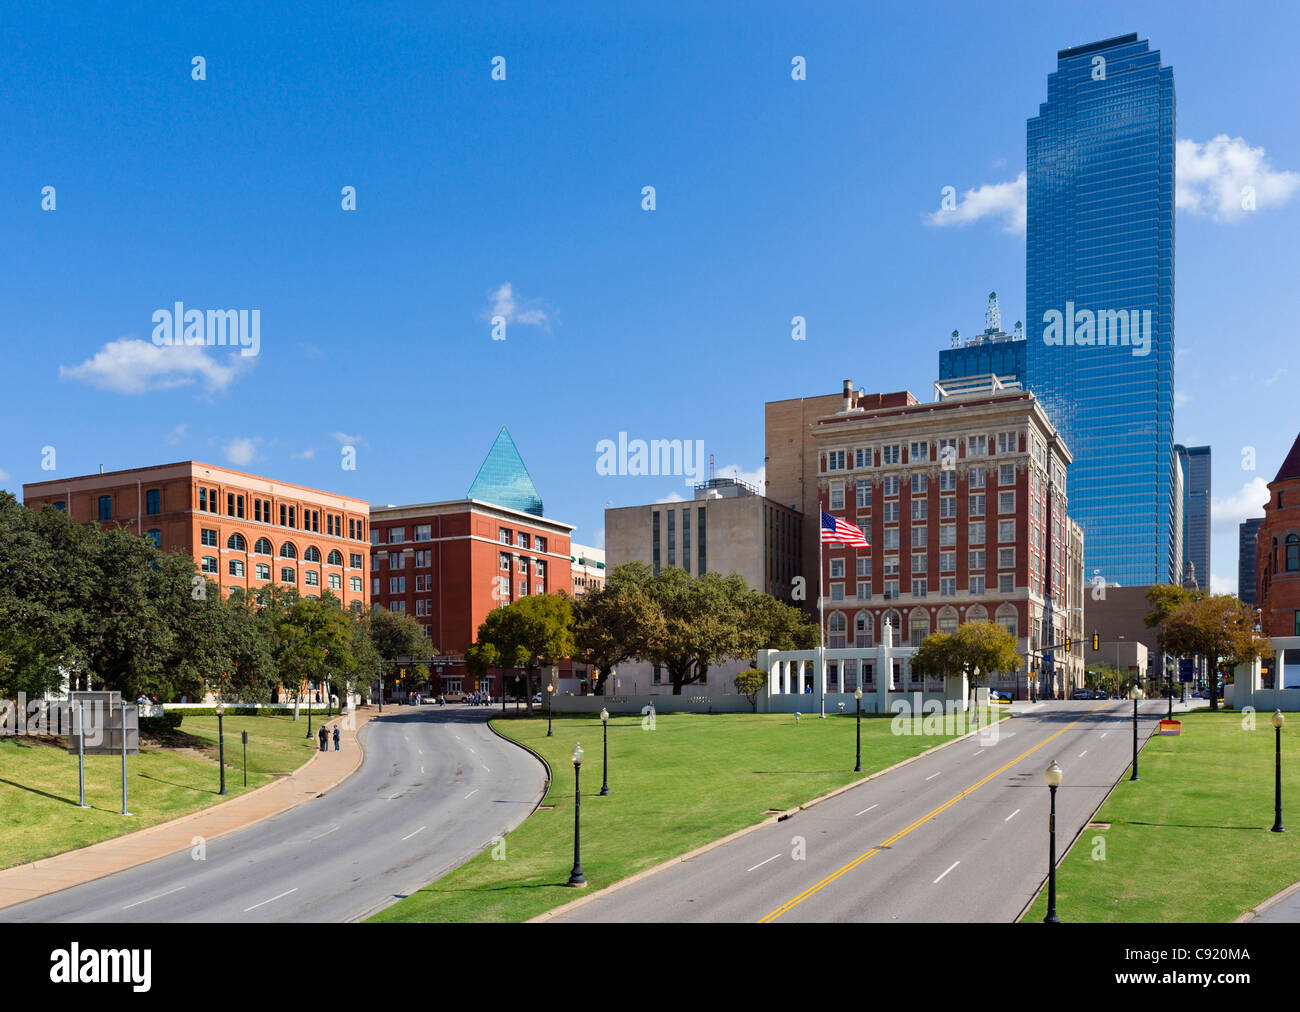 Site de l'assassinat de Kennedy en regardant vers Dealey Plaza avec l'ancien Texas Schoolbook Depository à gauche, Dallas, Texas, USA Banque D'Images